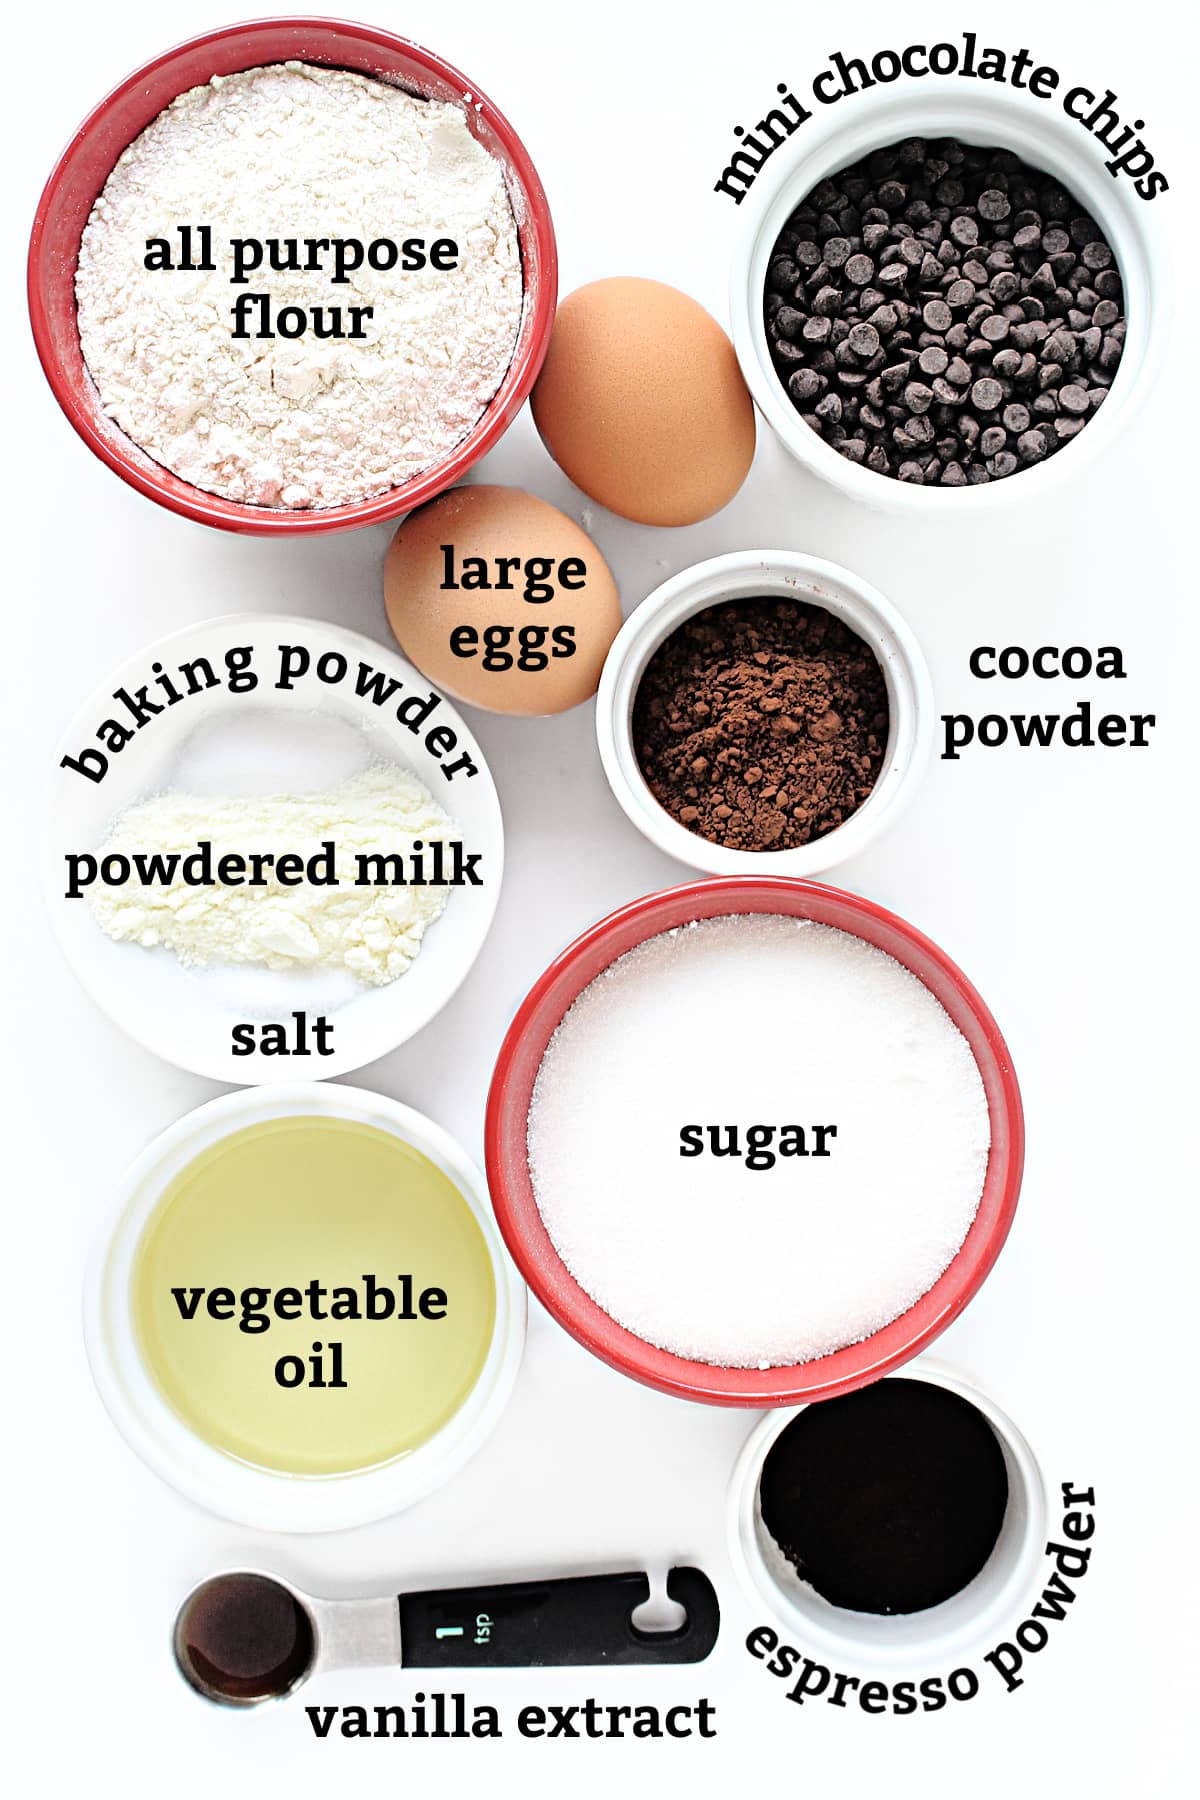 Ingredients: flour, eggs, mini chips, baking powder, powdered milk, salt, sugar, oil, cocoa, espresso powder, vanilla.